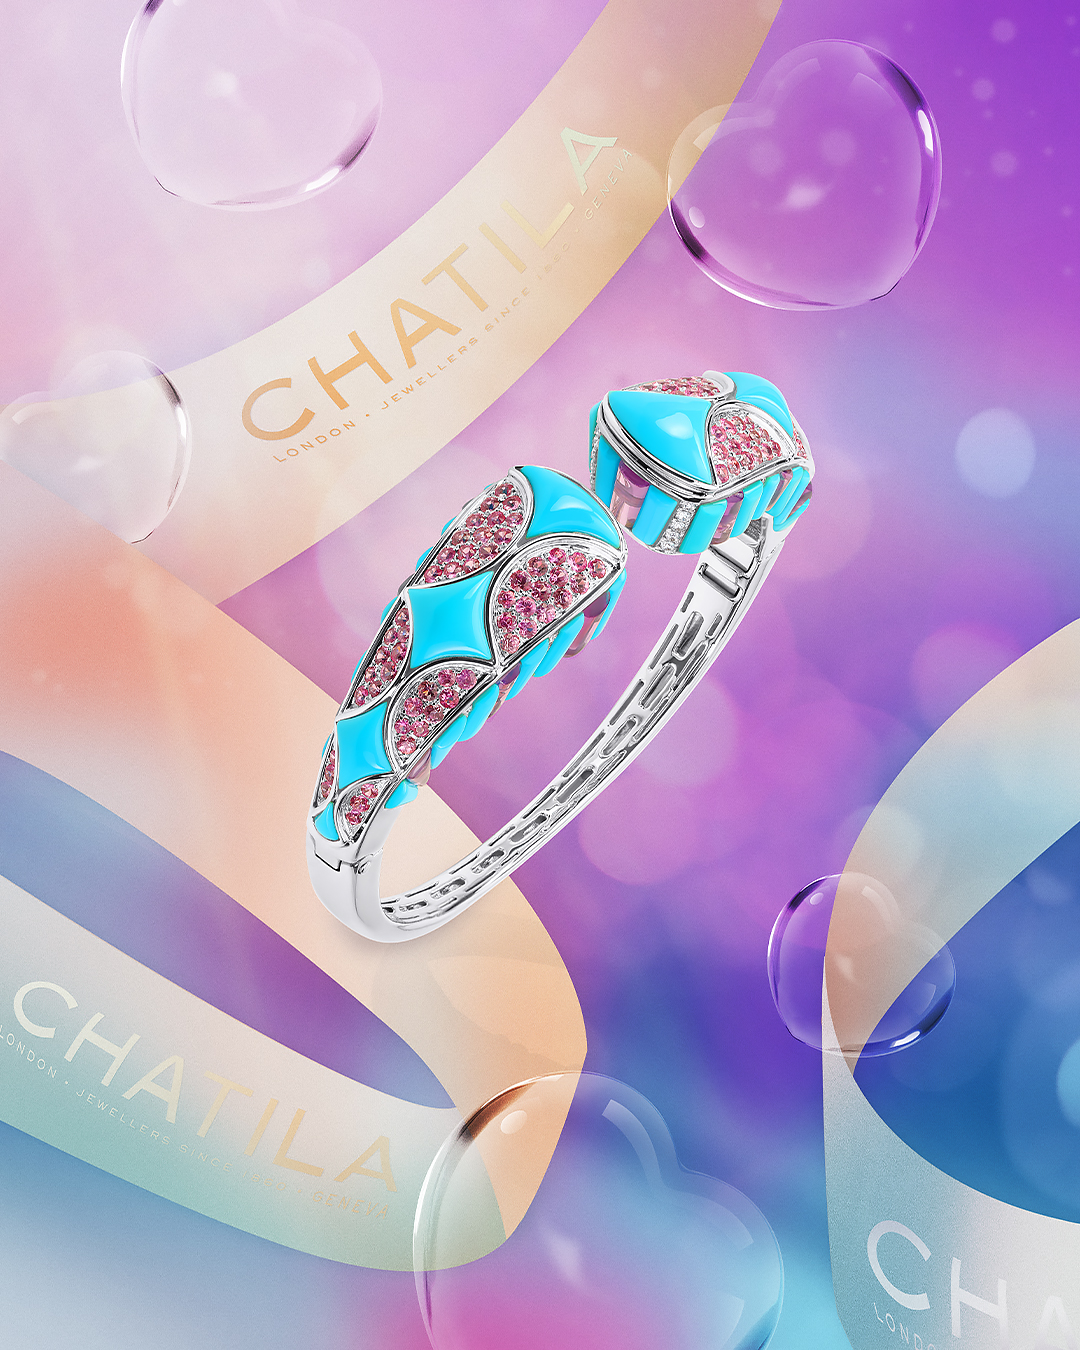 celia fabbri photography illustration chatila high jewellery valentine bracelet